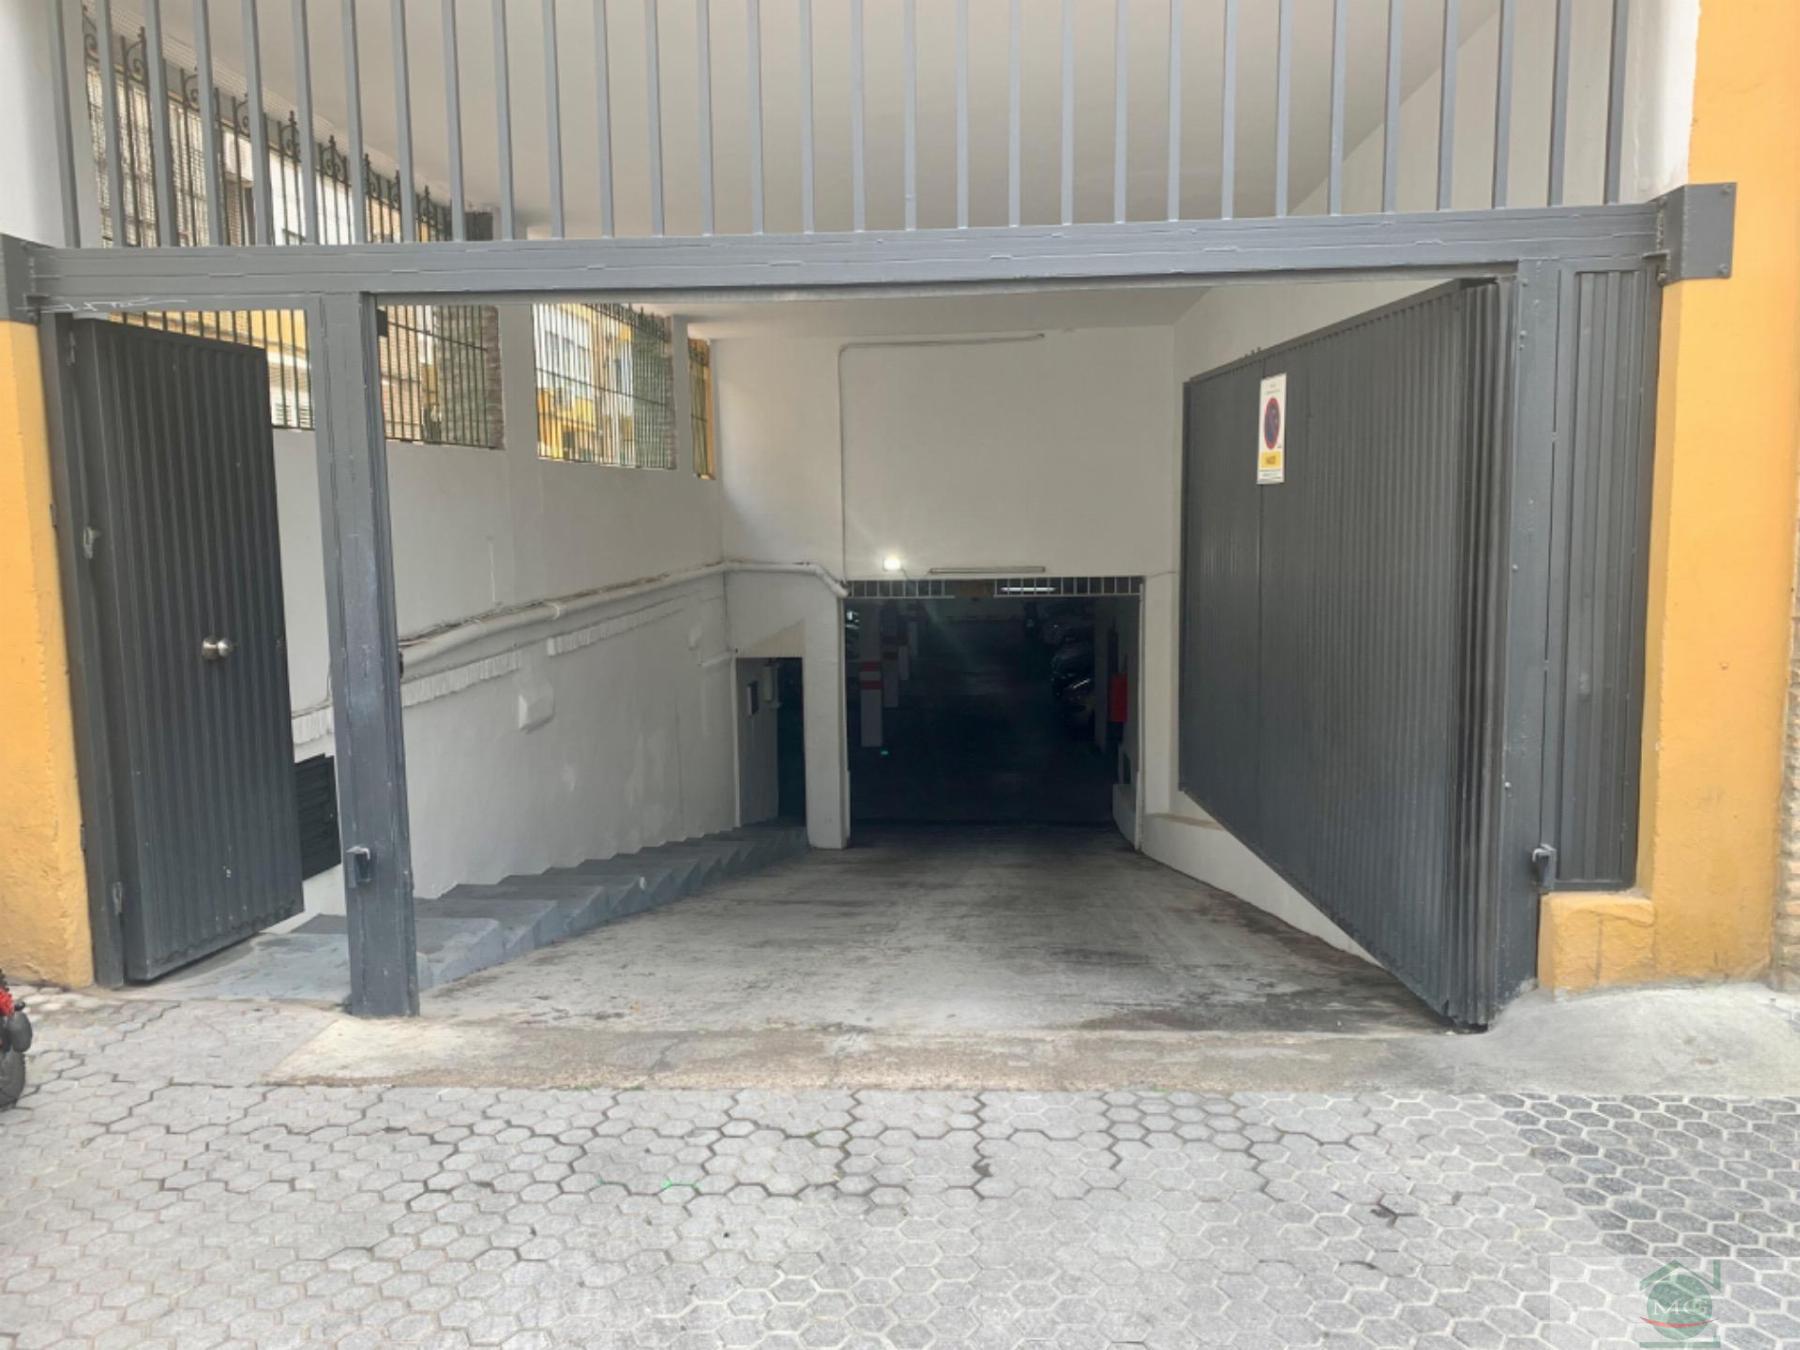 For sale of garage in Sevilla